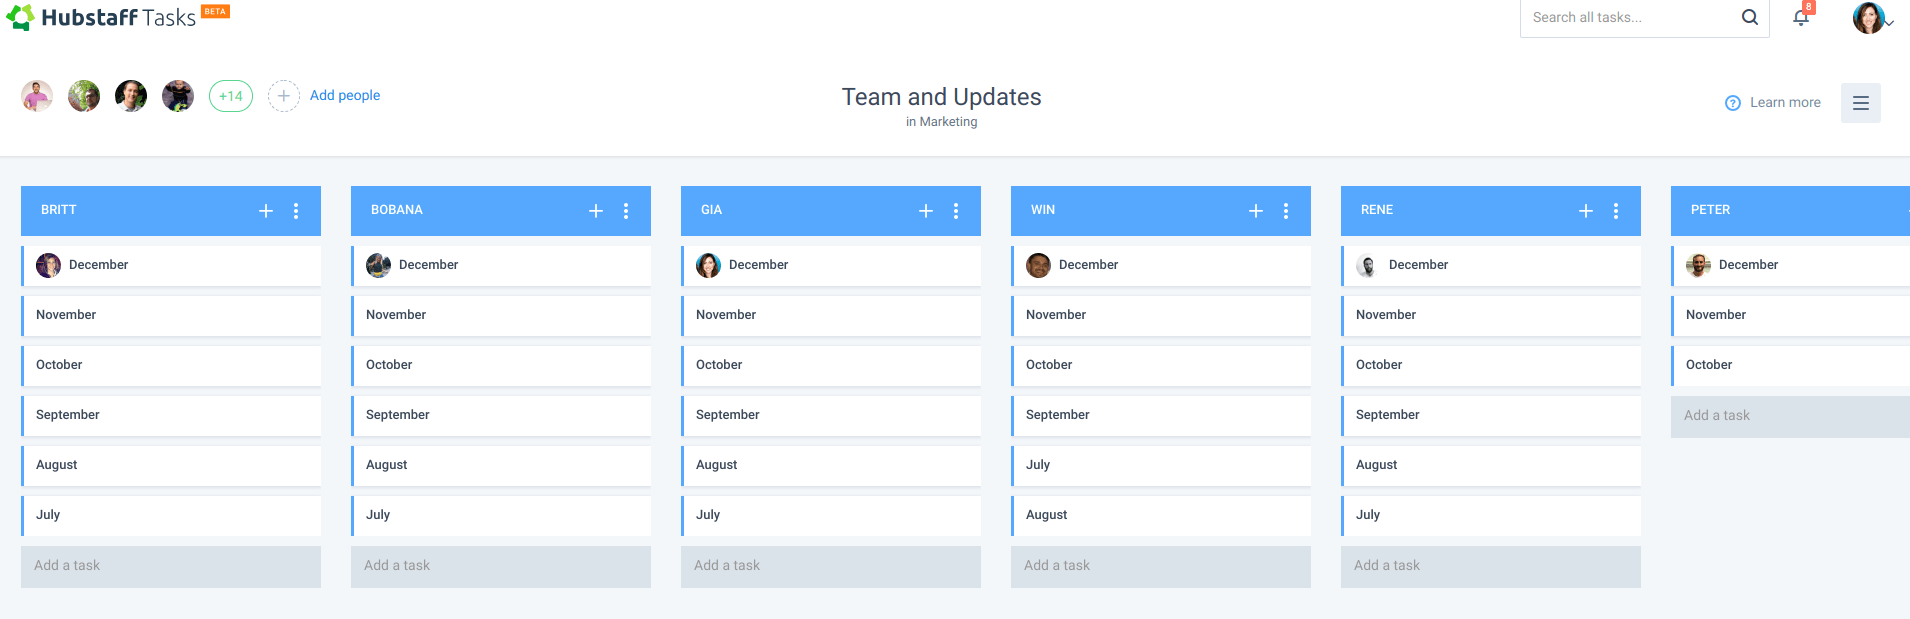 hubstaff tasks board for team updates